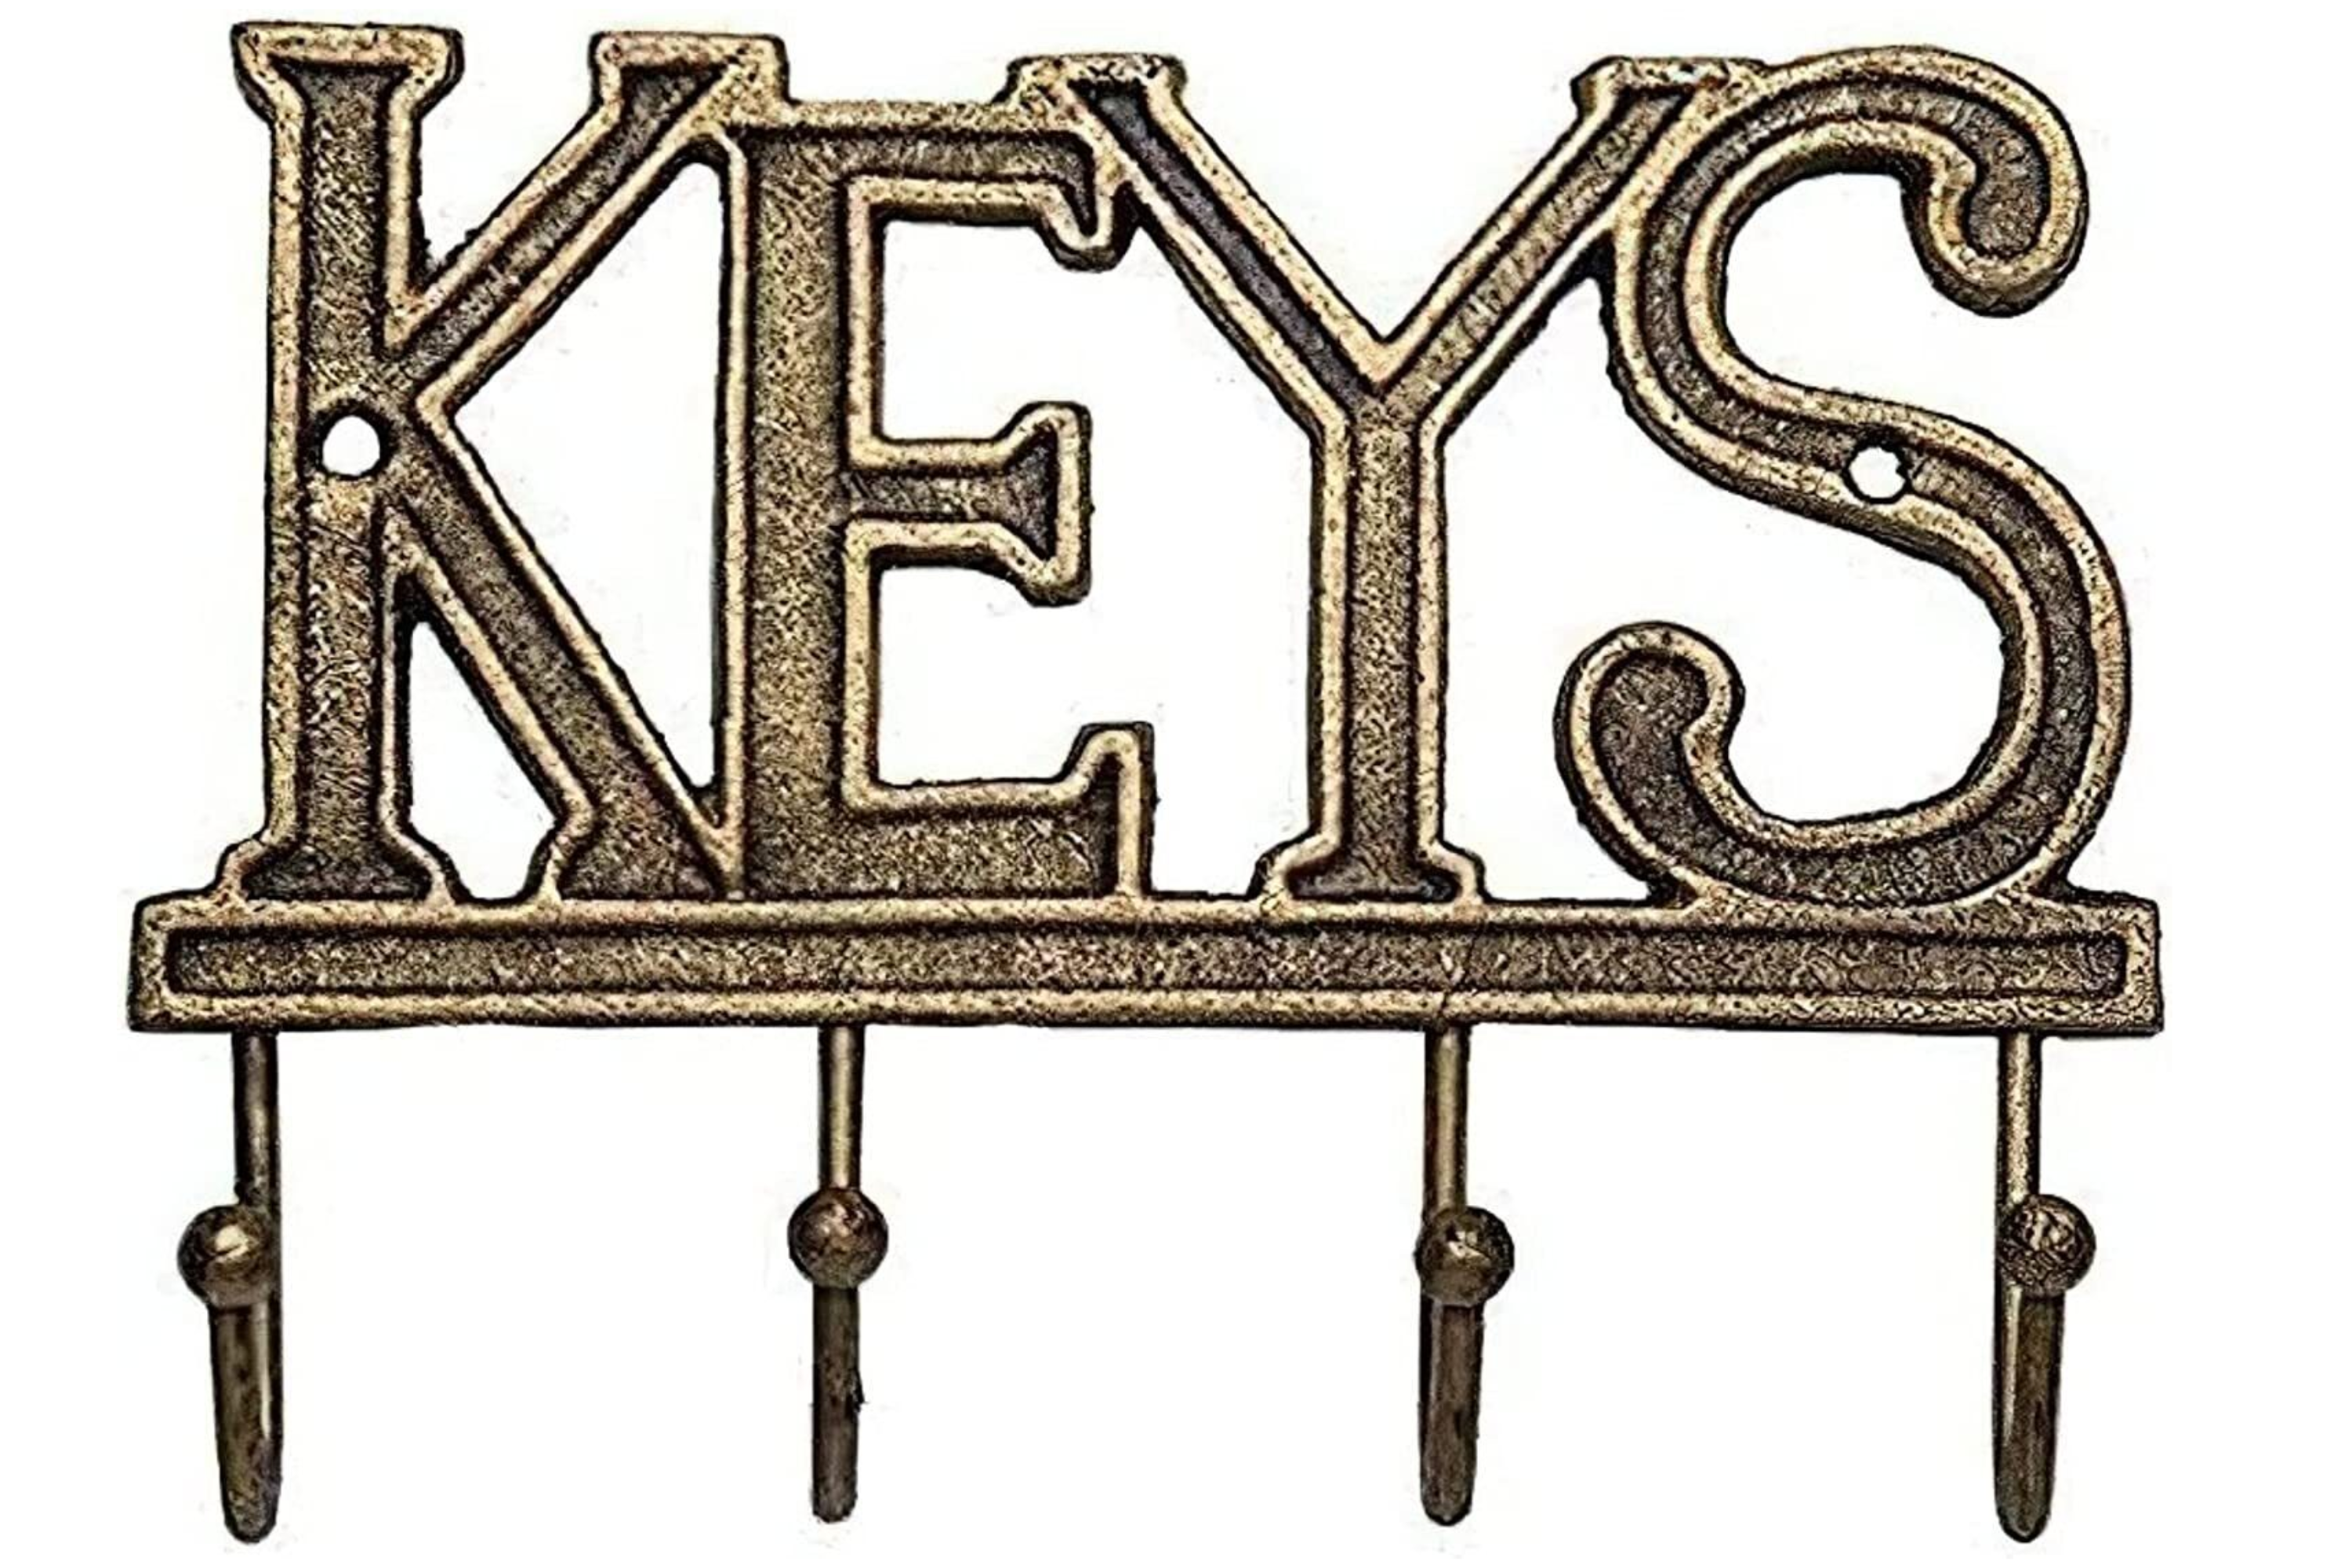 Comfify Key Holder for Wall - Cast Iron Decorative Farmhouse Rustic Wall  Mount Key Organizer - 4 Key Hooks - Vintage Key Rack for Entryway with  Screws